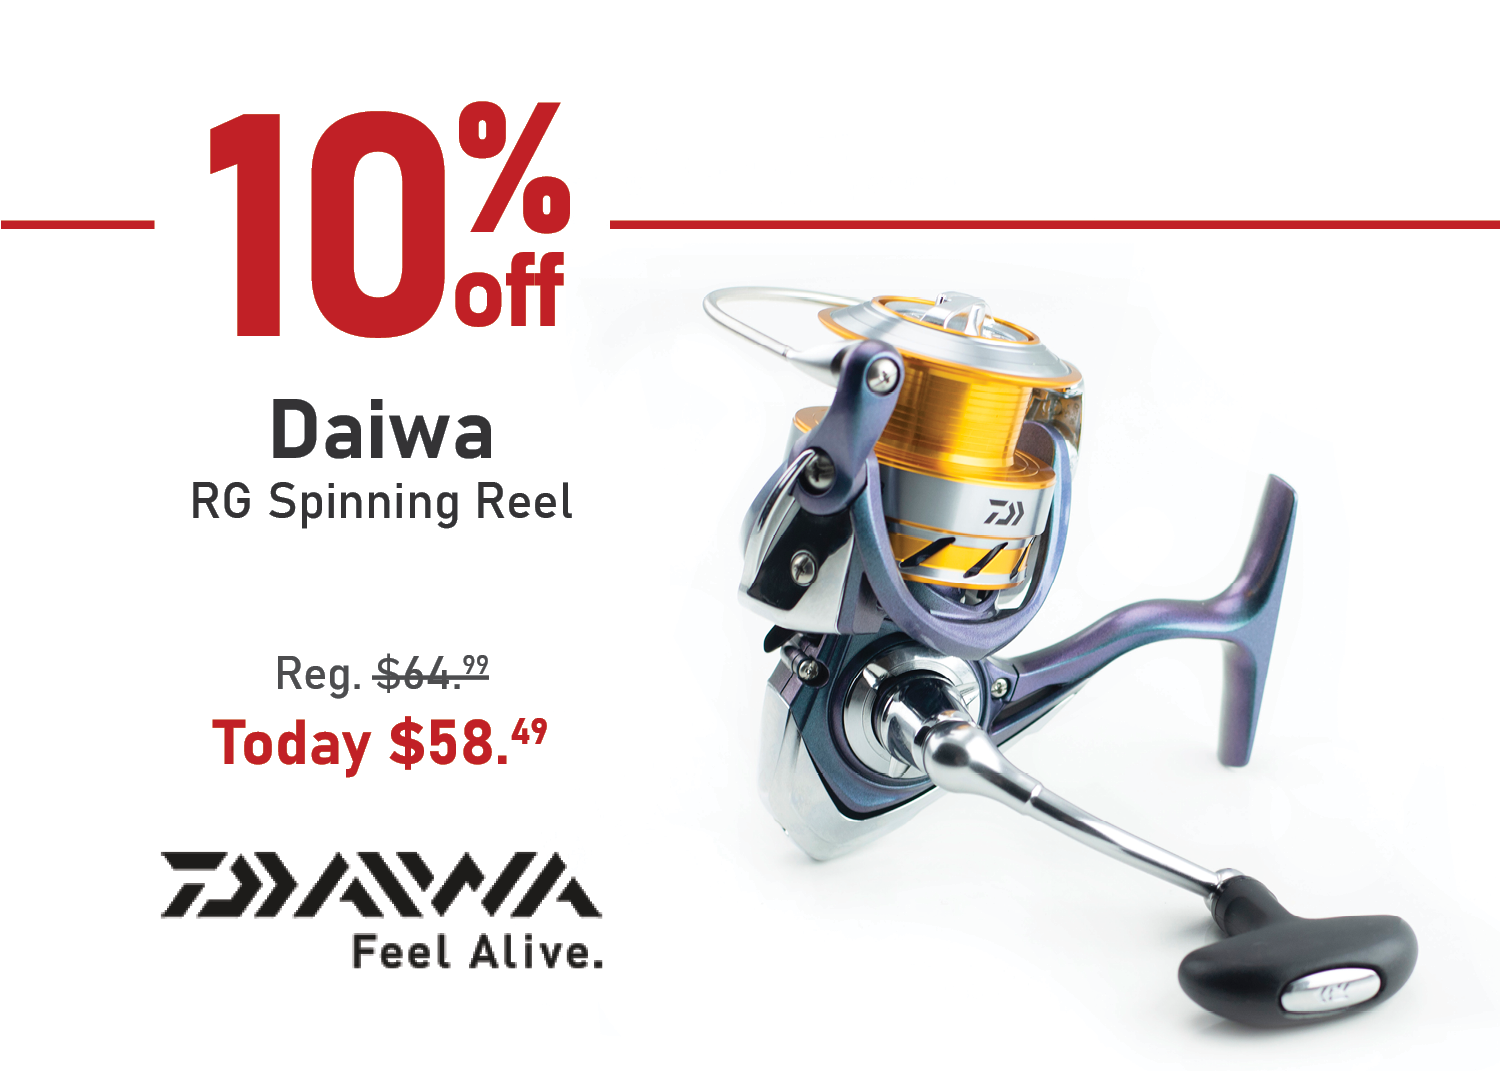 Save 10% on the Daiwa RG Spinning Reel